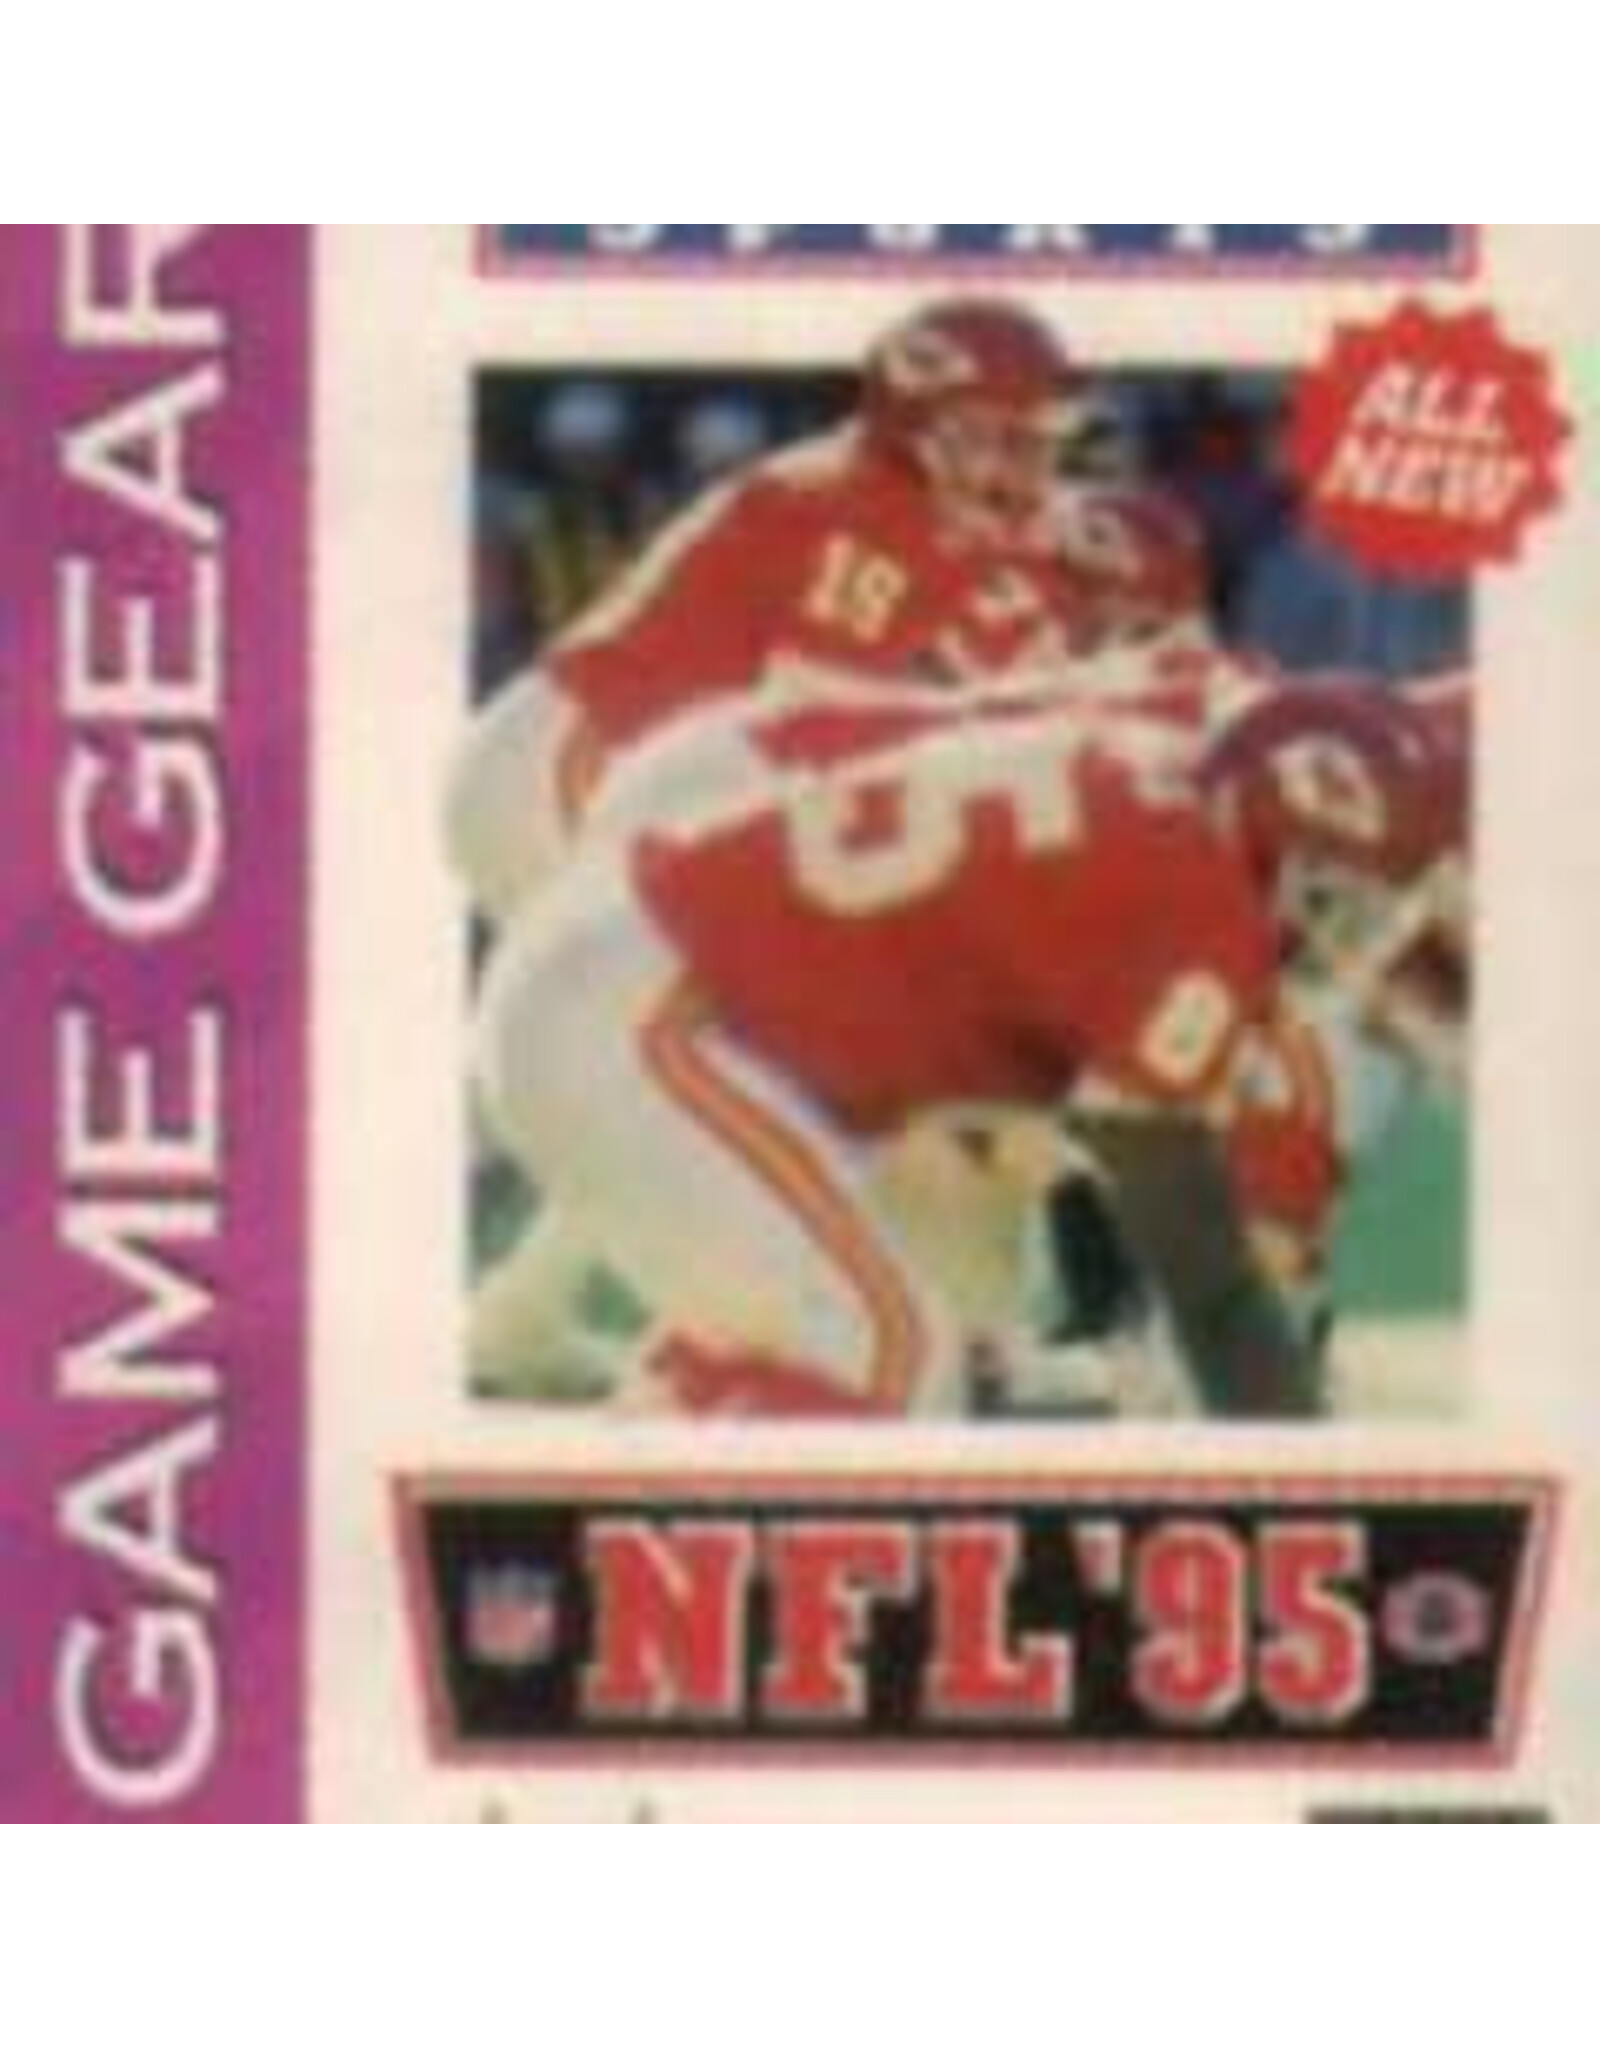 Sega Game Gear NFL 95 (Cart Only)